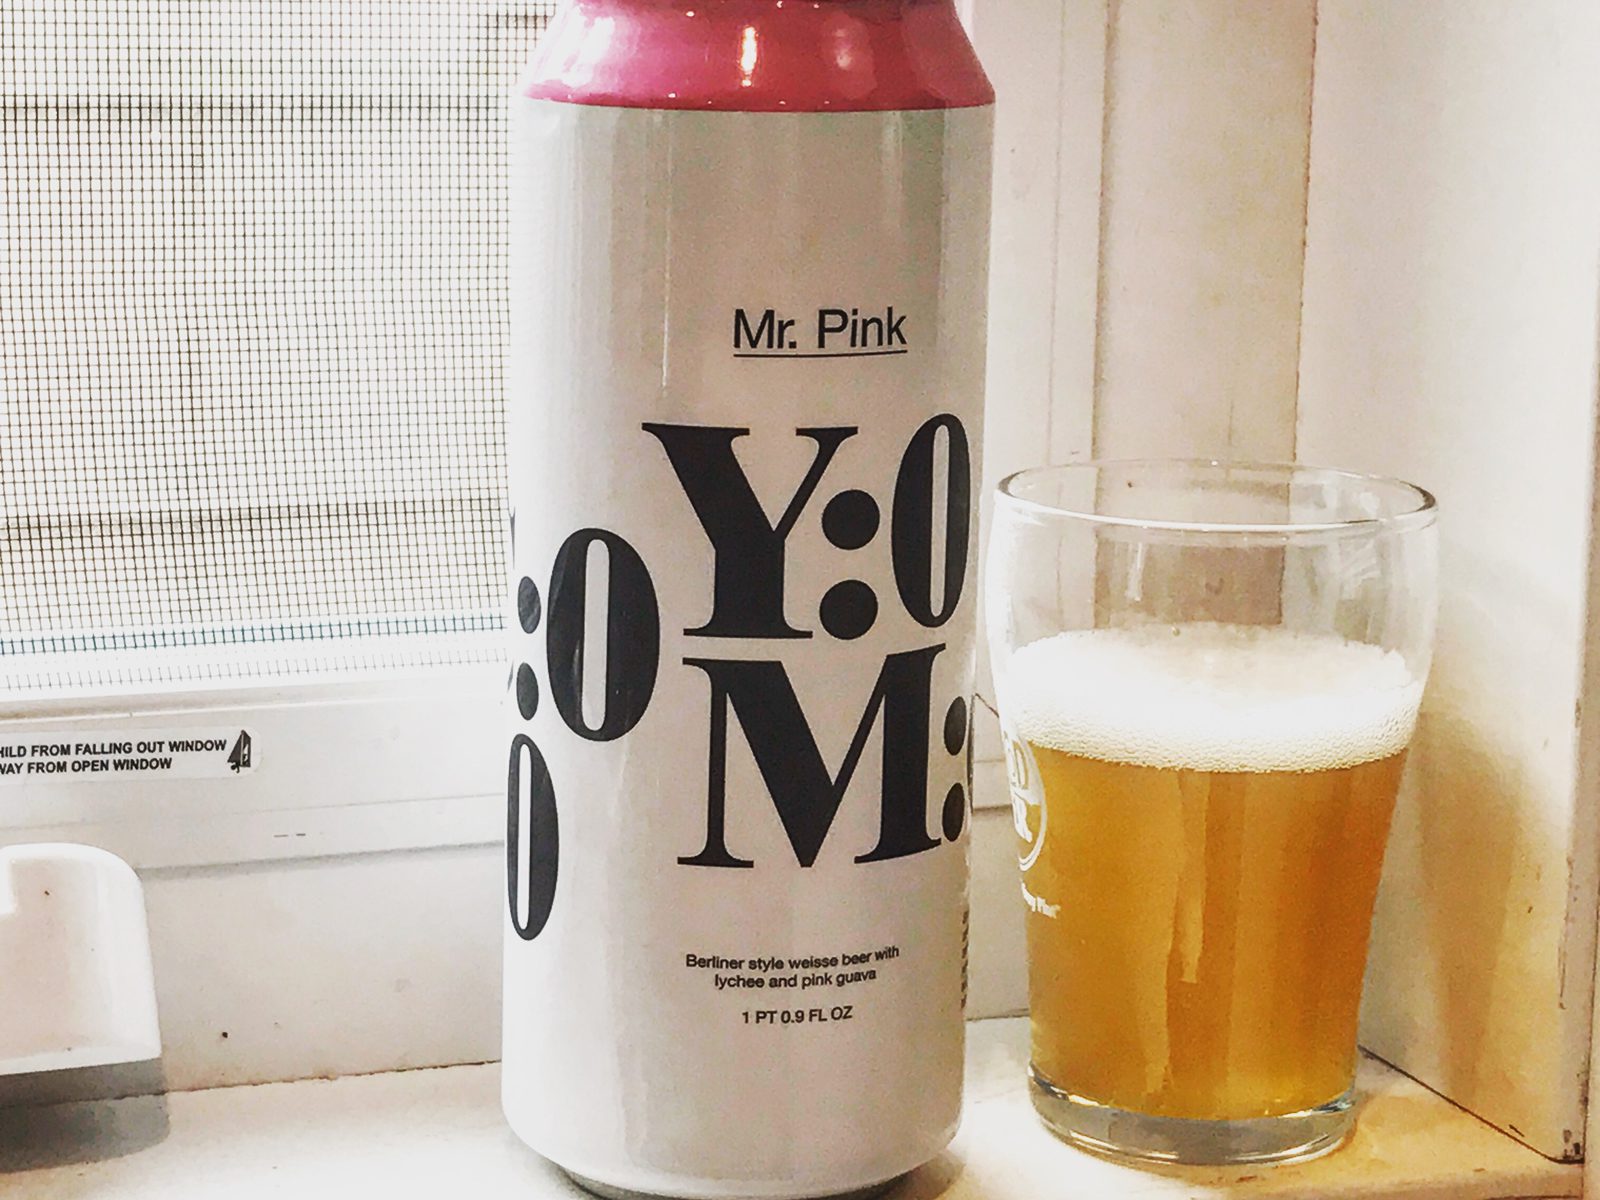 To Øl Brewery: Mr. Pink